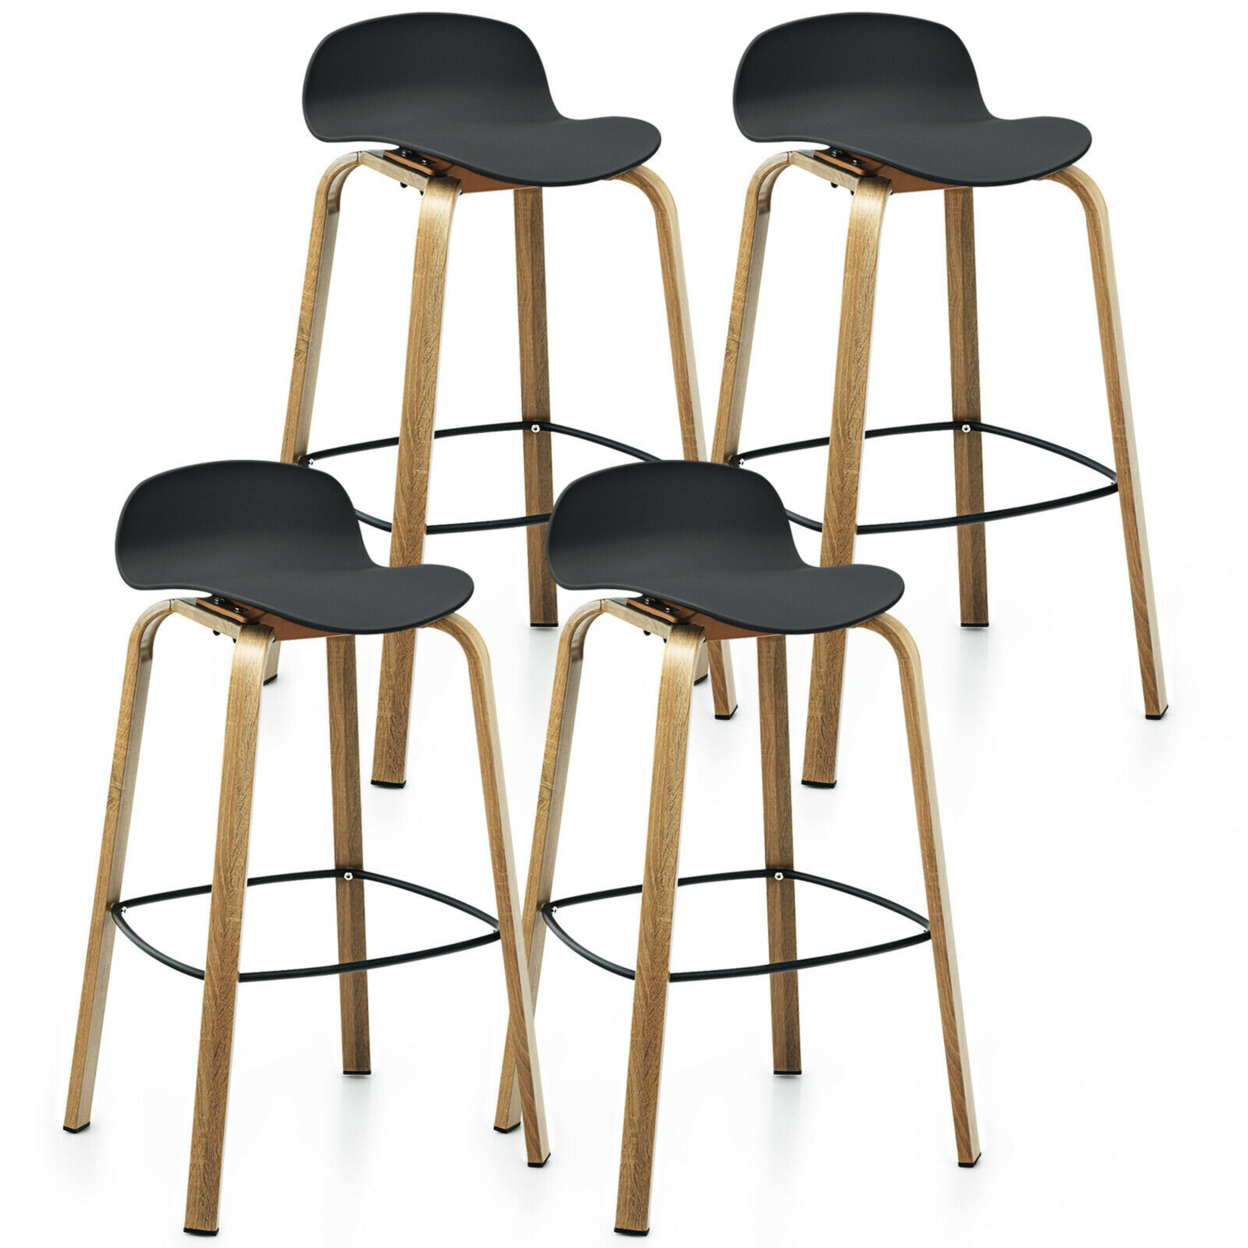 Modern Set Of 4 Barstools 30inch Pub Chairs W/Low Back & Metal Legs Black